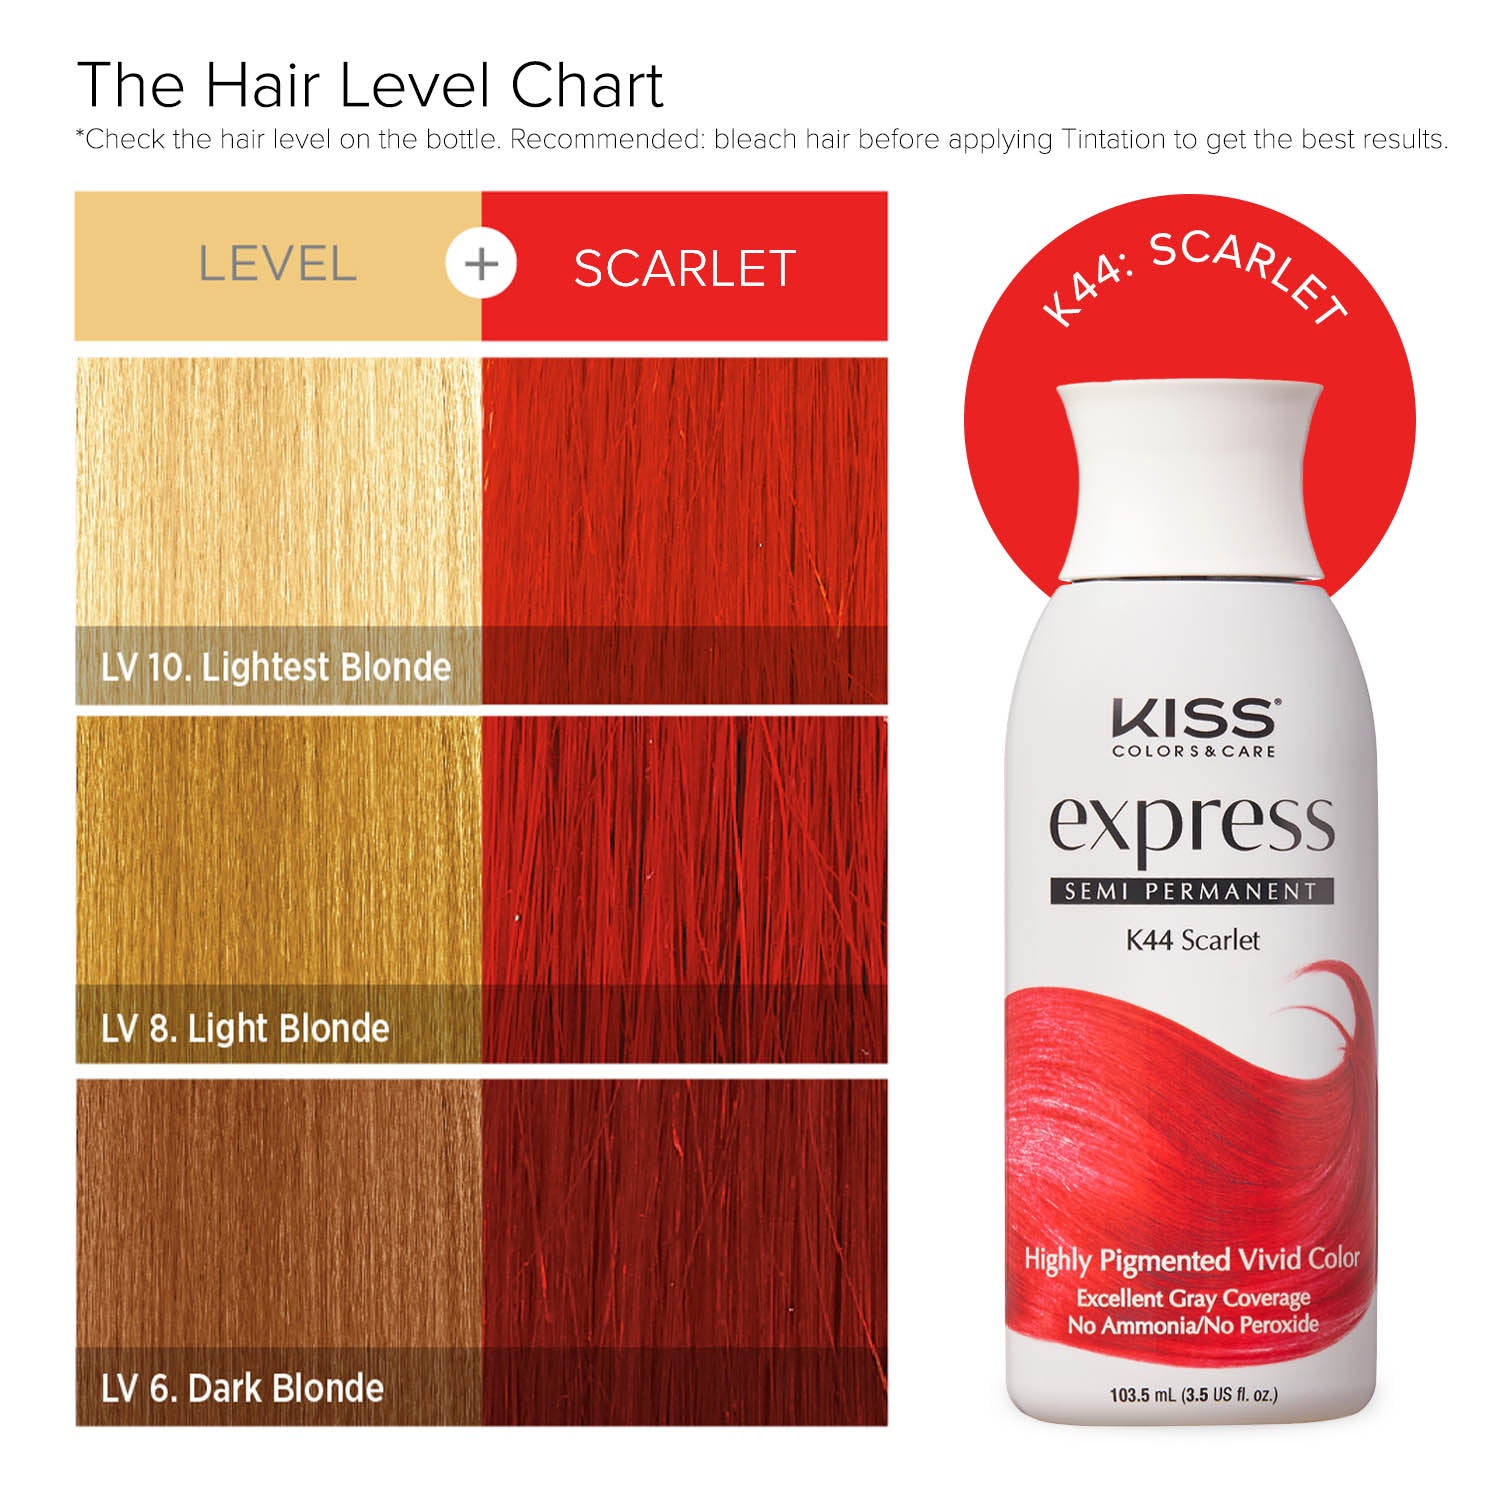 Kiss Express Semi-Permanent Hair Color - Scarlet, 3.5 Oz (K44)